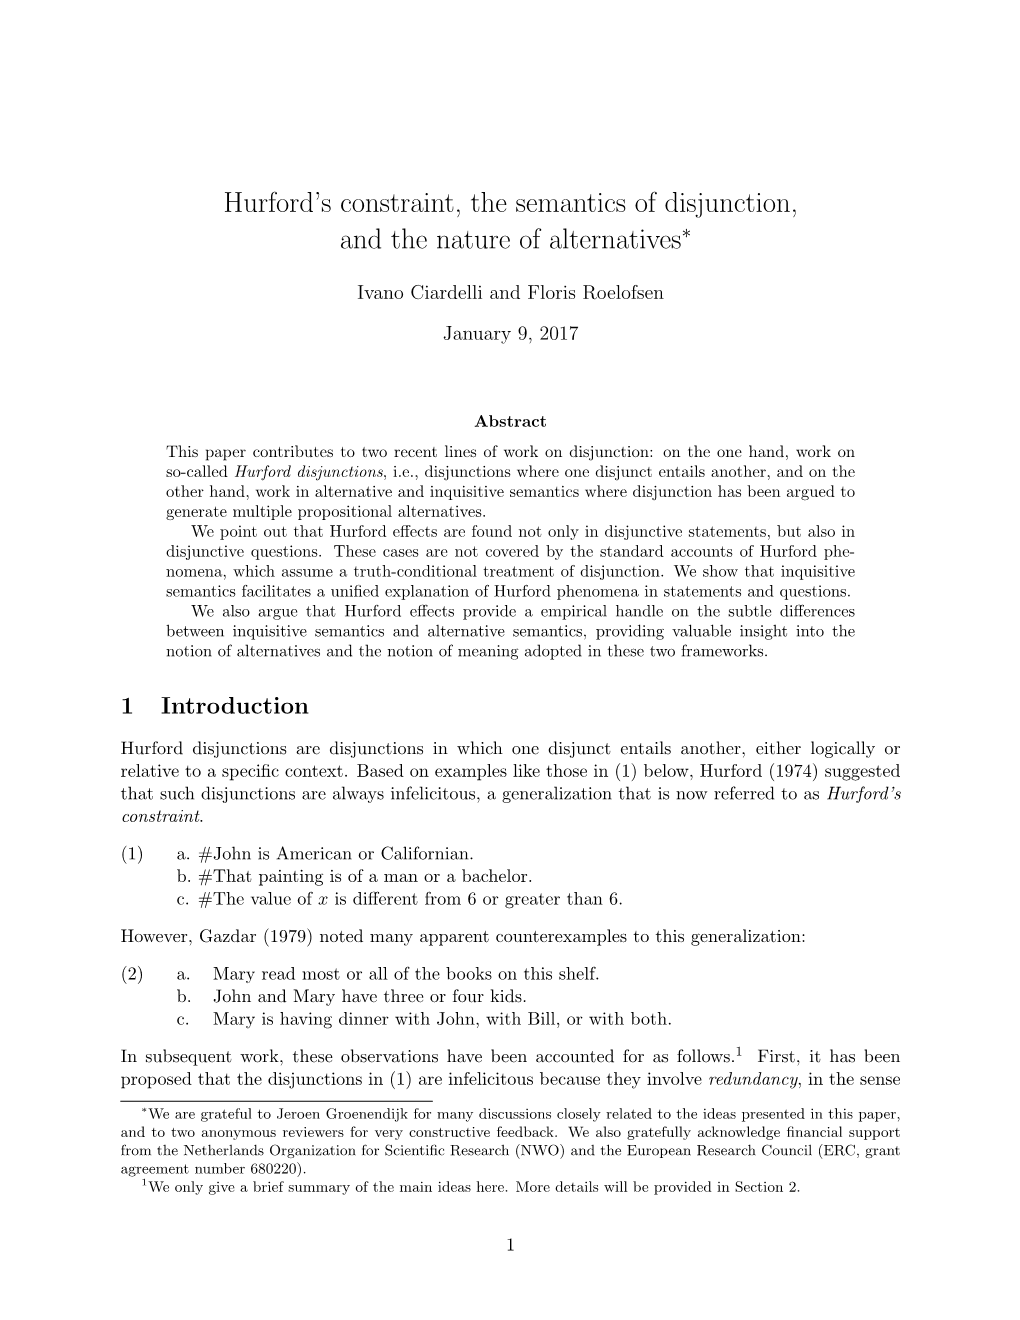 Hurford's Constraint, the Semantics of Disjunction